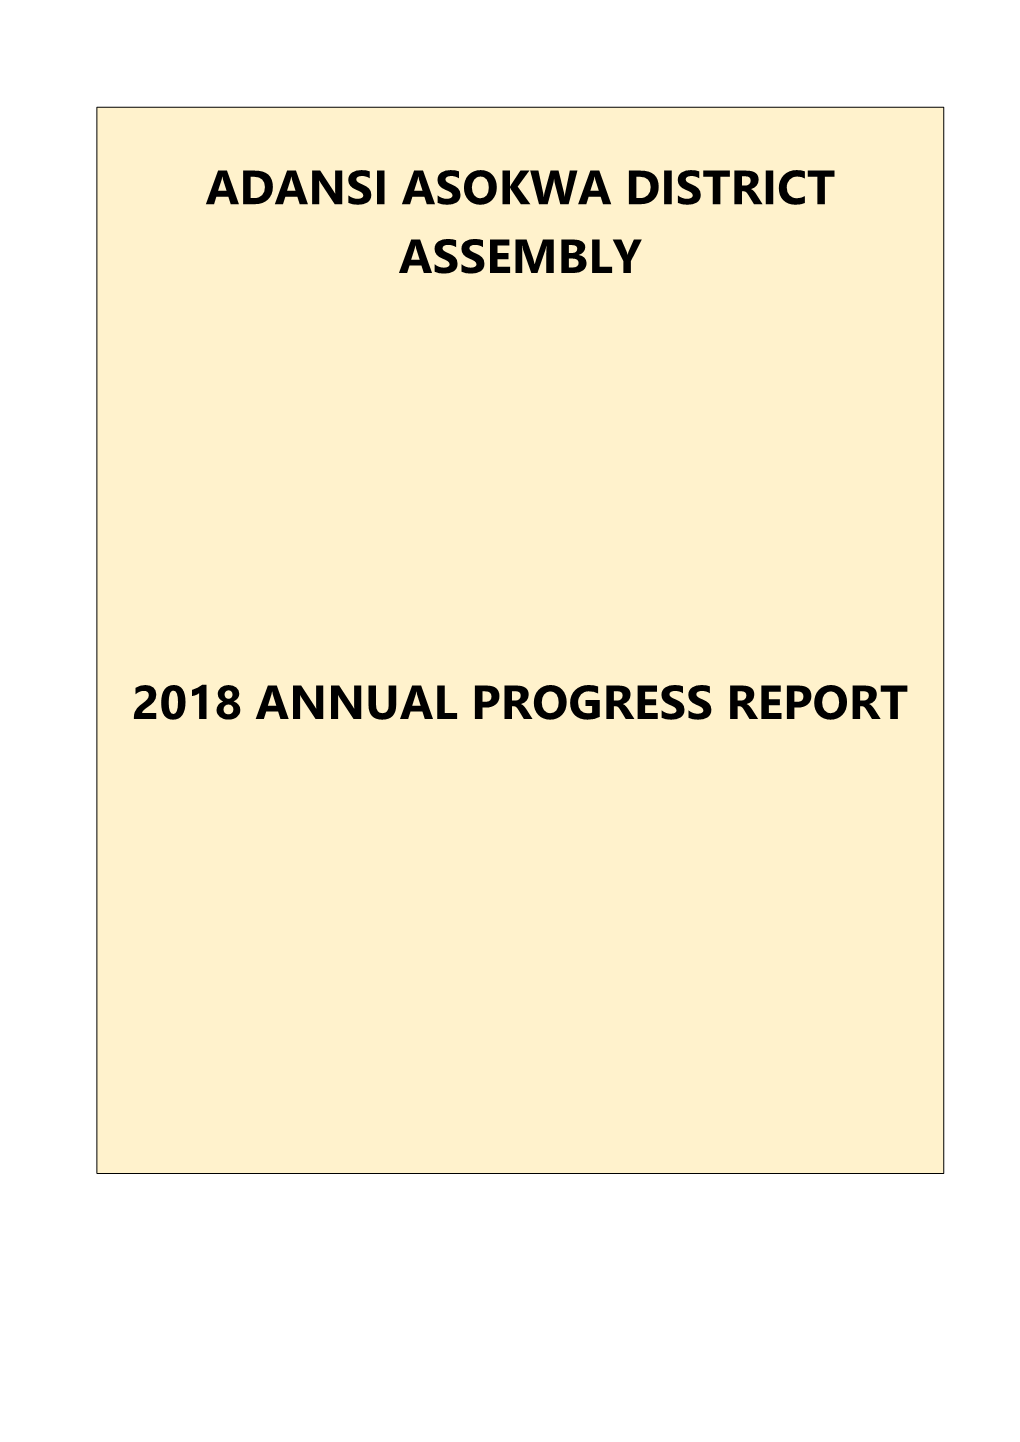 Adansi Asokwa District Assembly 2018 Annual Progress Report